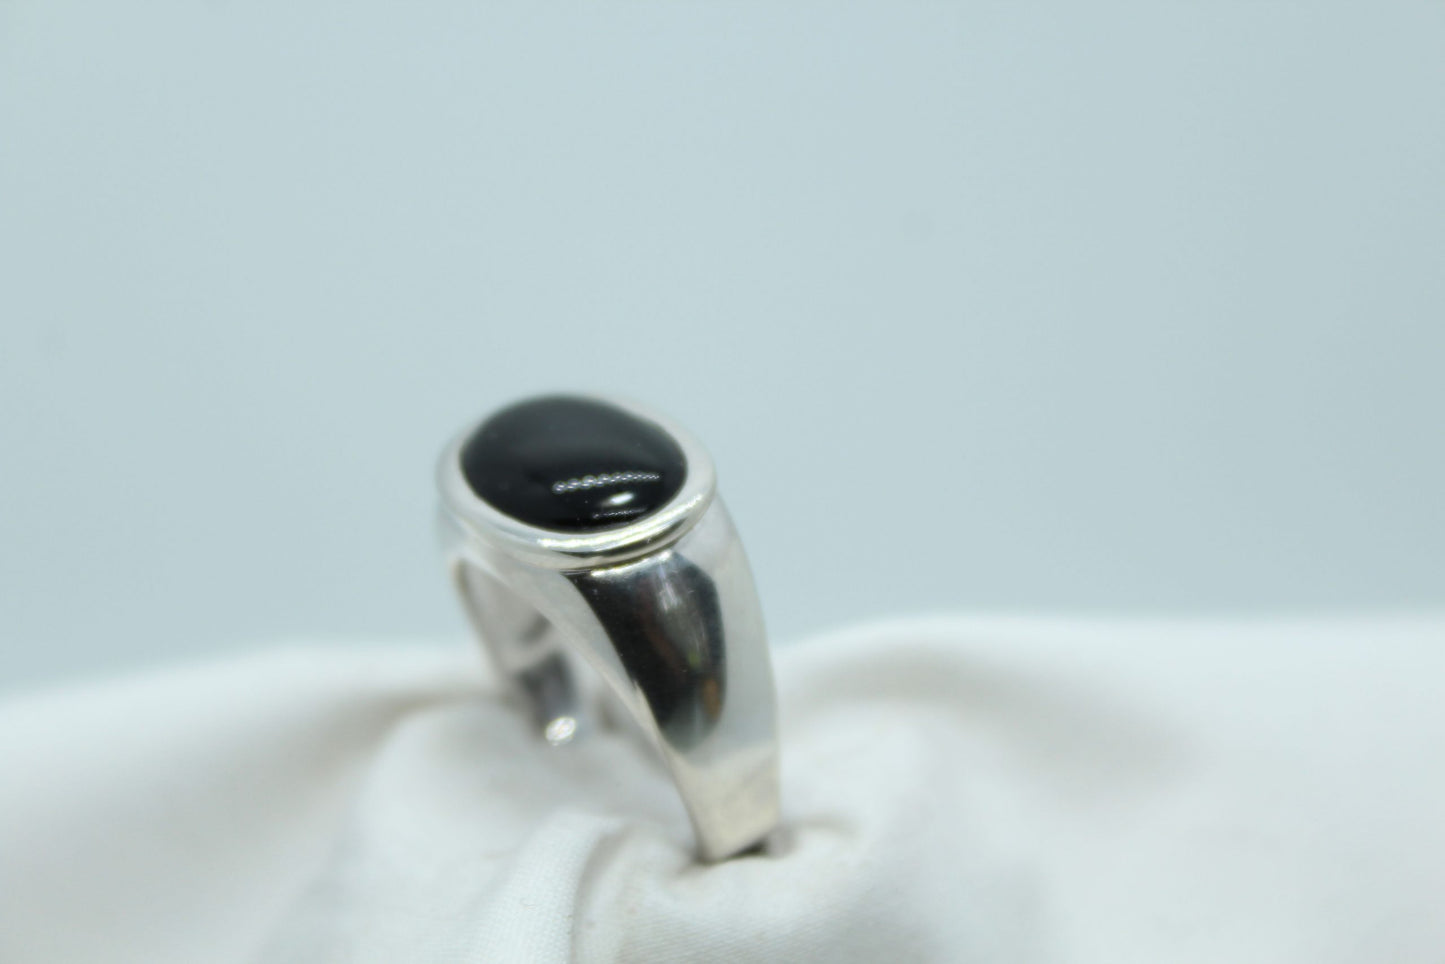 Silver Men's Black Onyx Ring